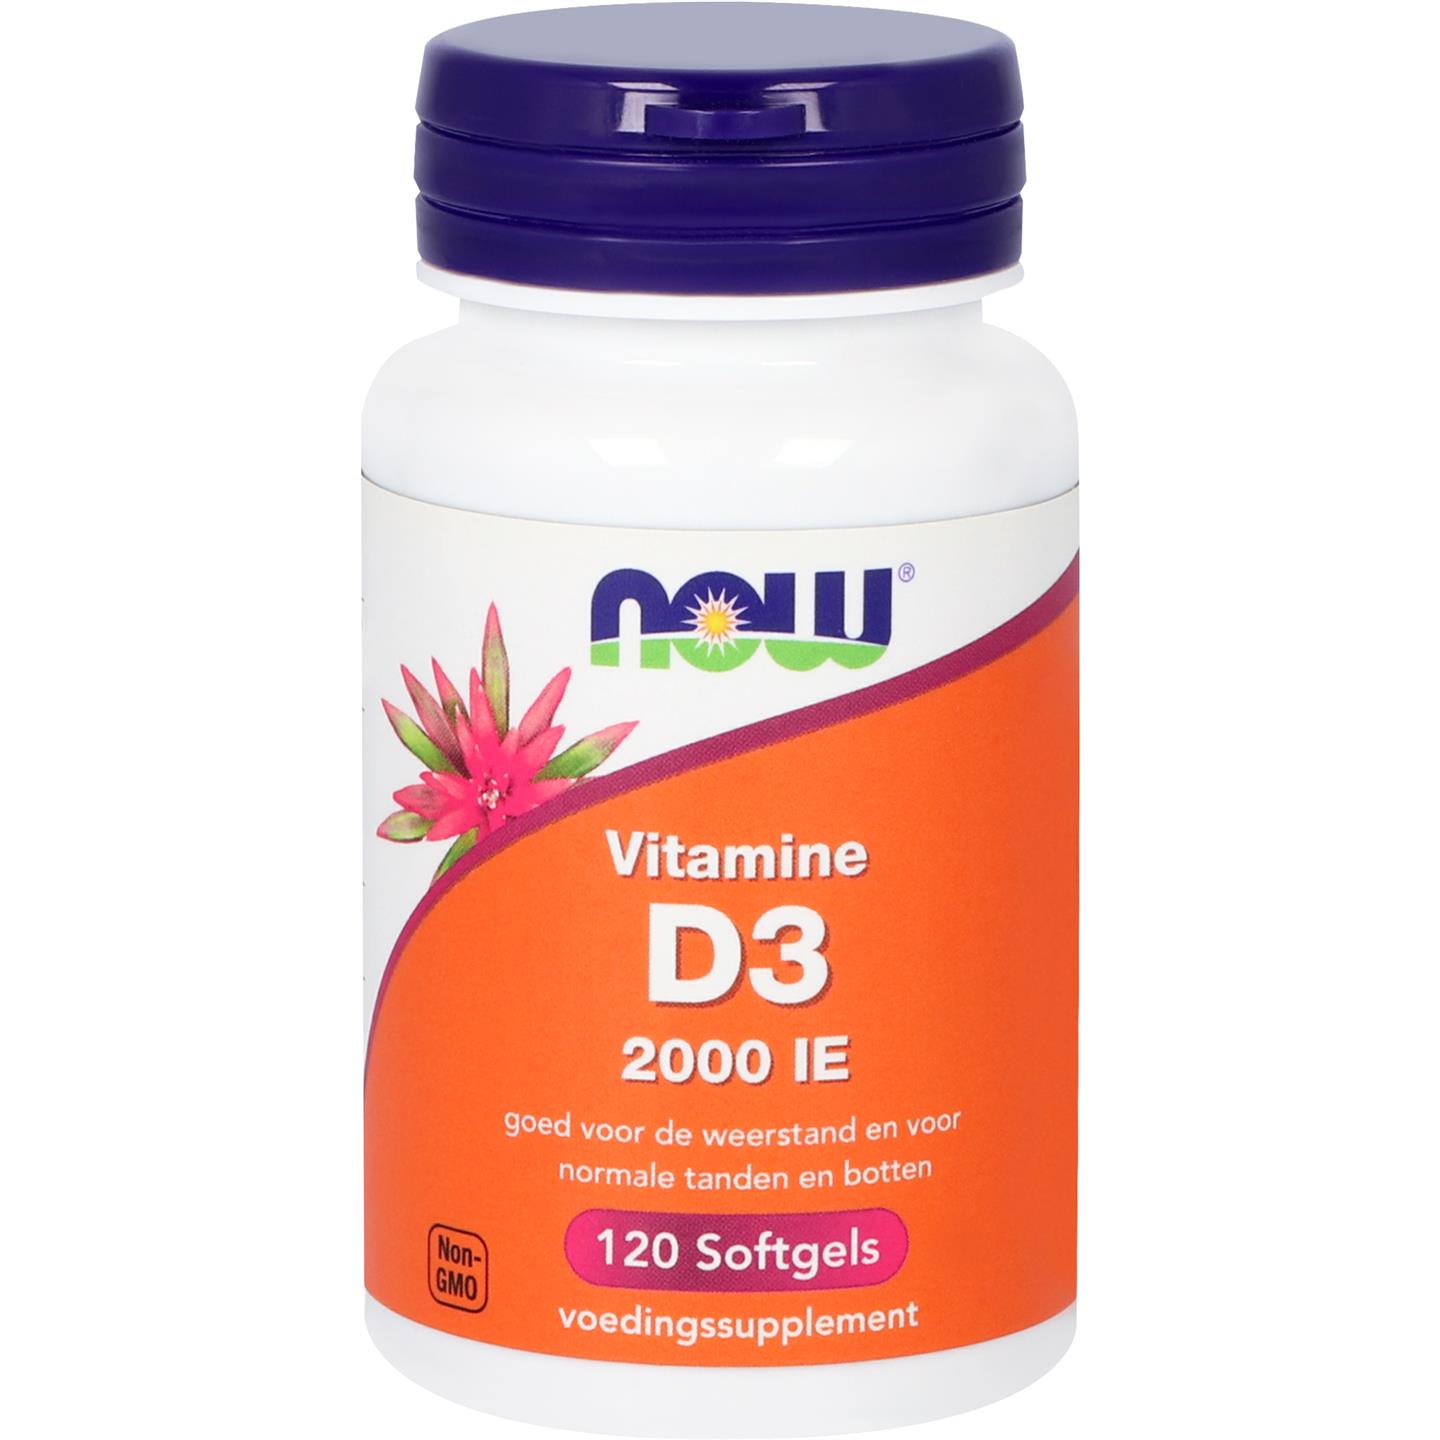 Vitamine D3 2000 IE